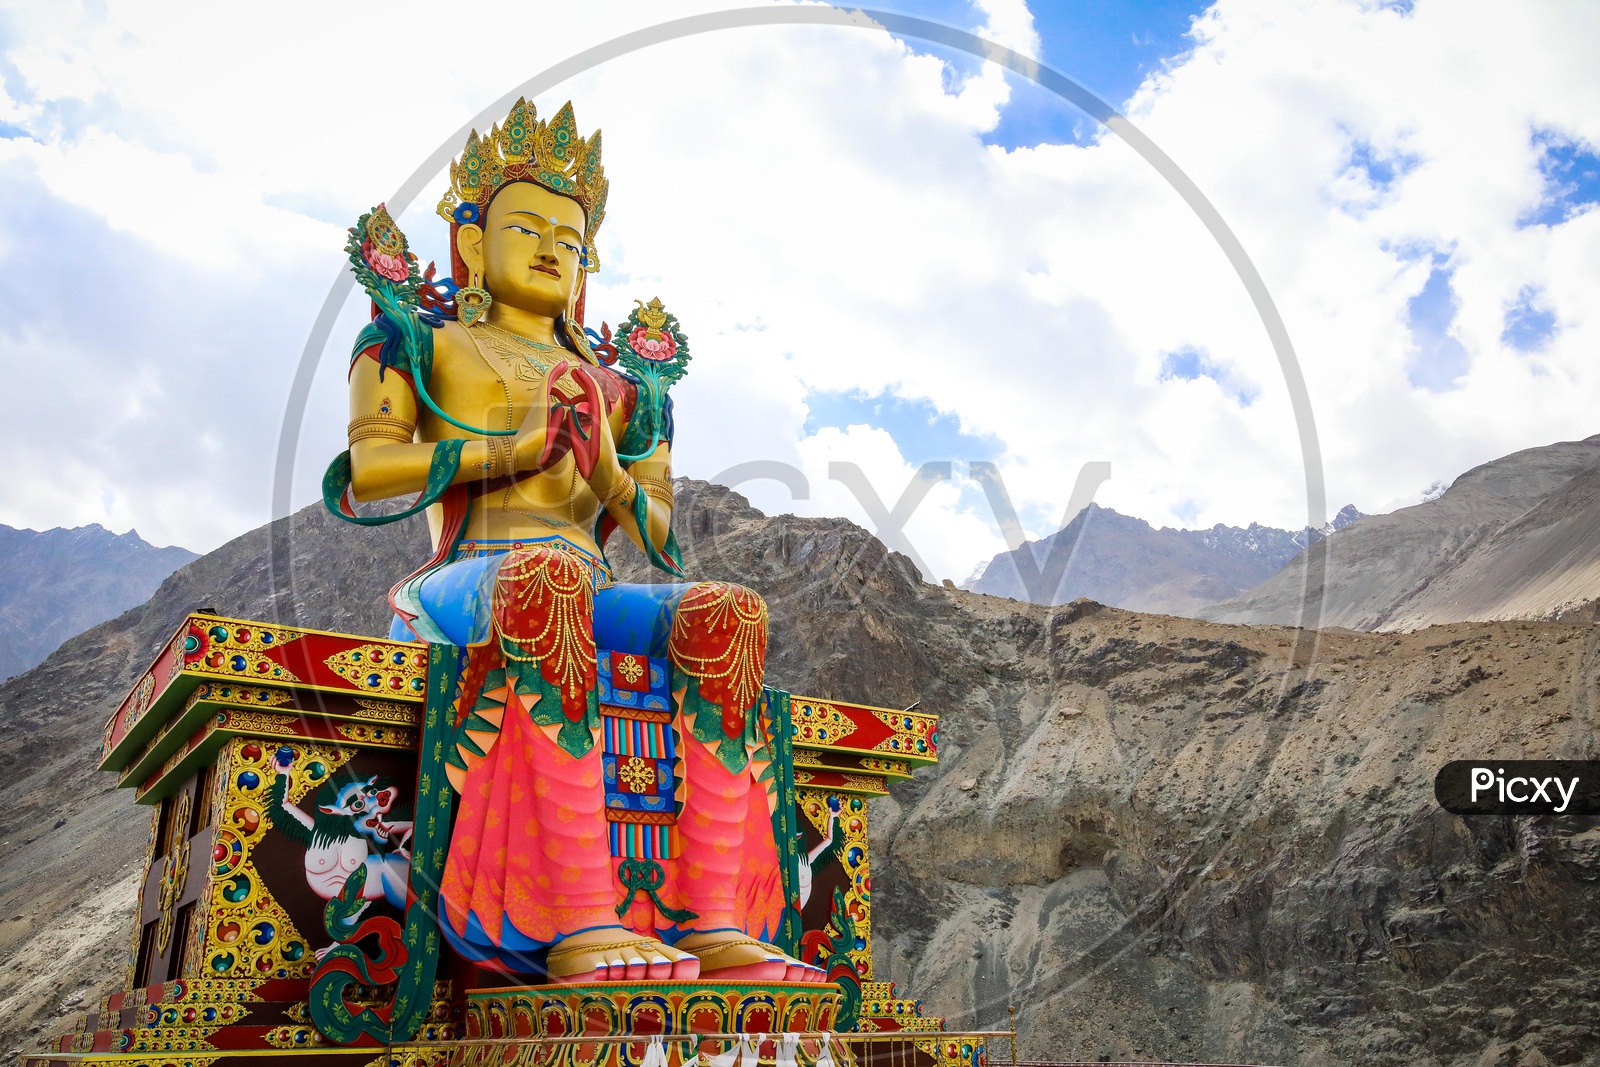 Giant Maitreya Statue alongside the mountains